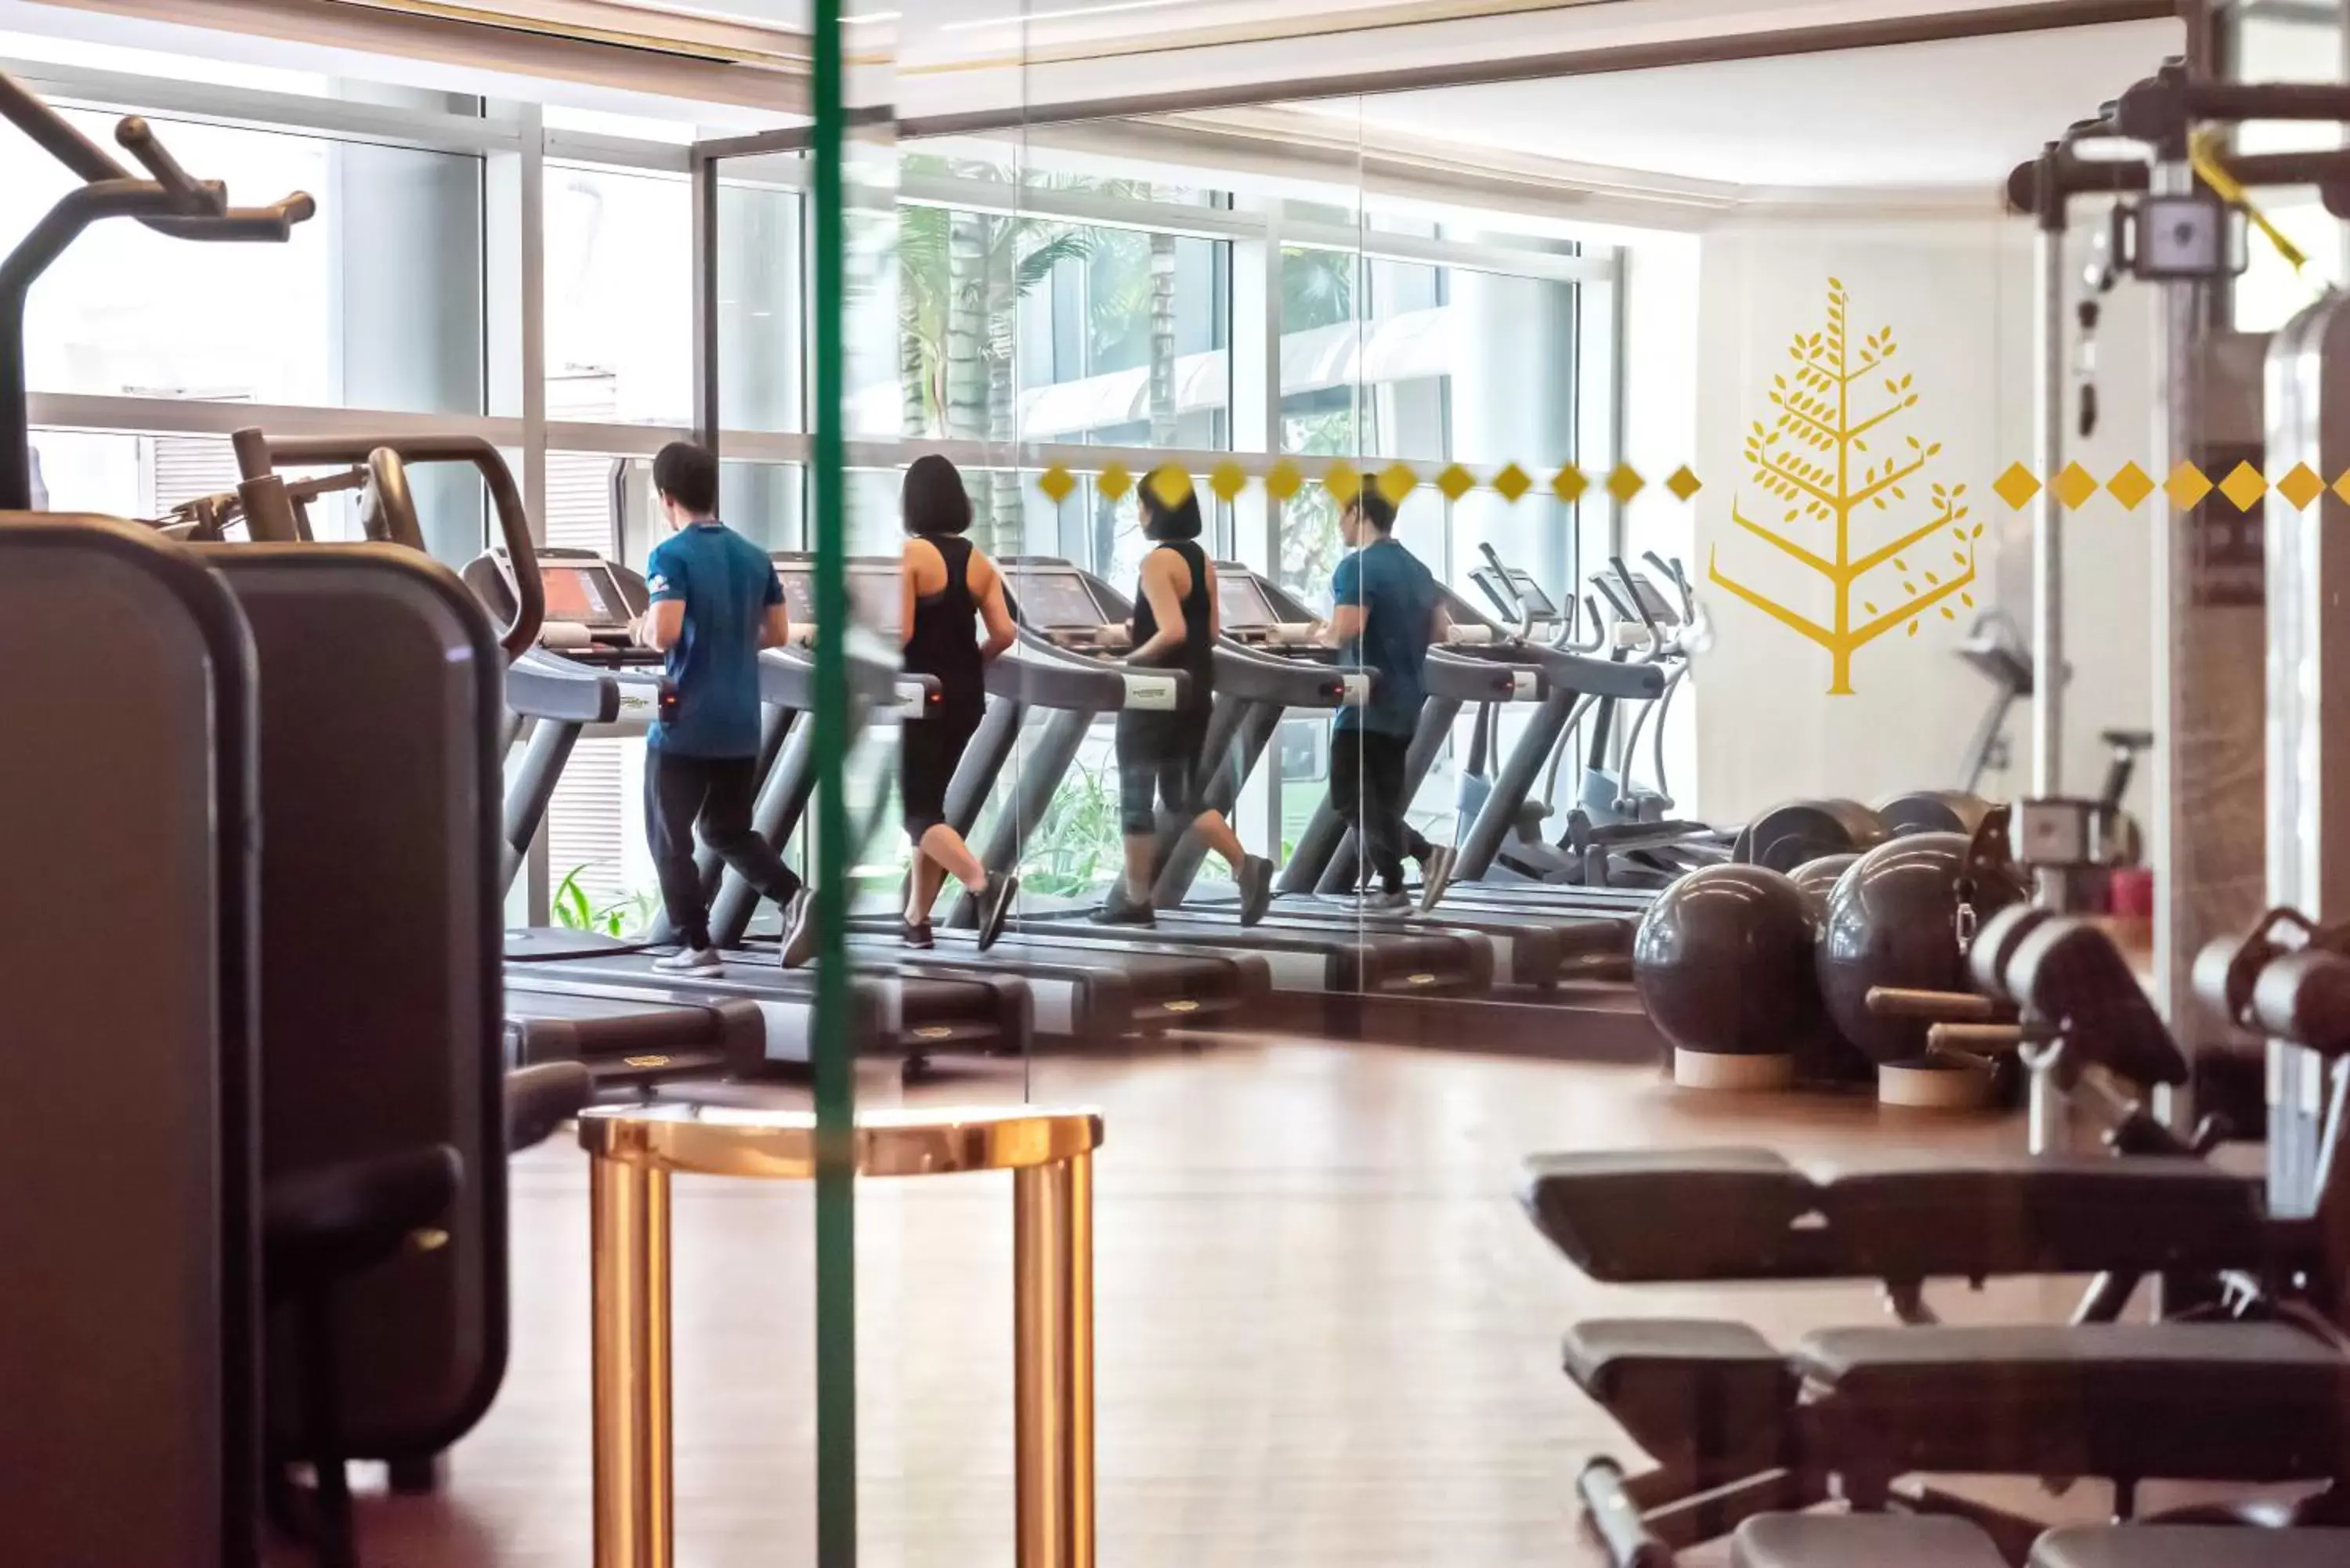 Fitness centre/facilities, Fitness Center/Facilities in Four Seasons Hotel Jakarta